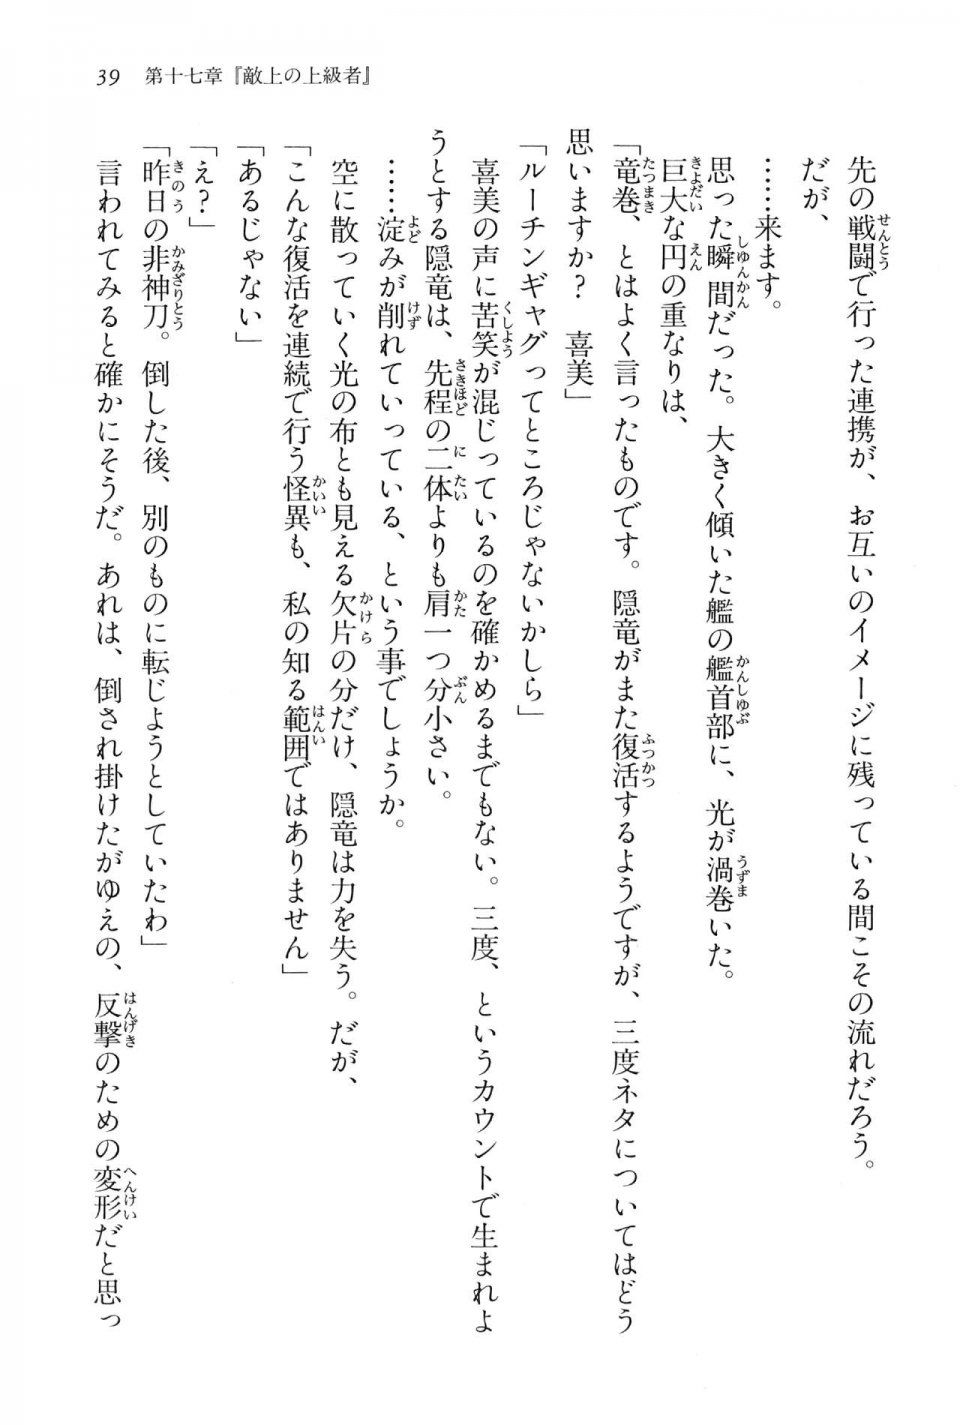 Kyoukai Senjou no Horizon BD Special Mininovel Vol 4(2B) - Photo #43